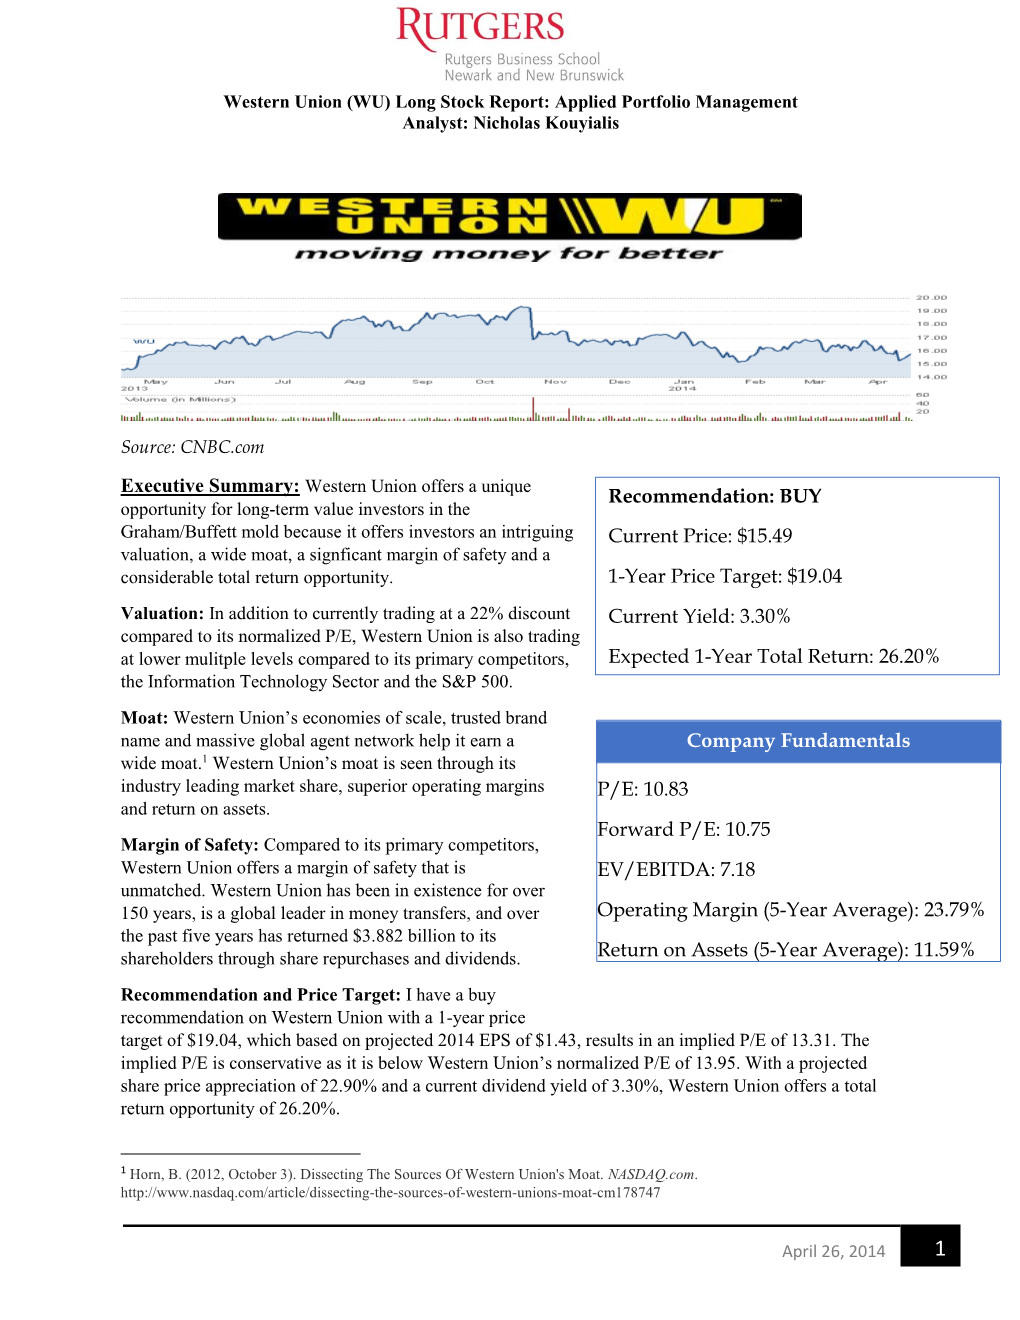 Western Union (WU) Long Stock Report: Applied Portfolio Management Analyst: Nicholas Kouyialis